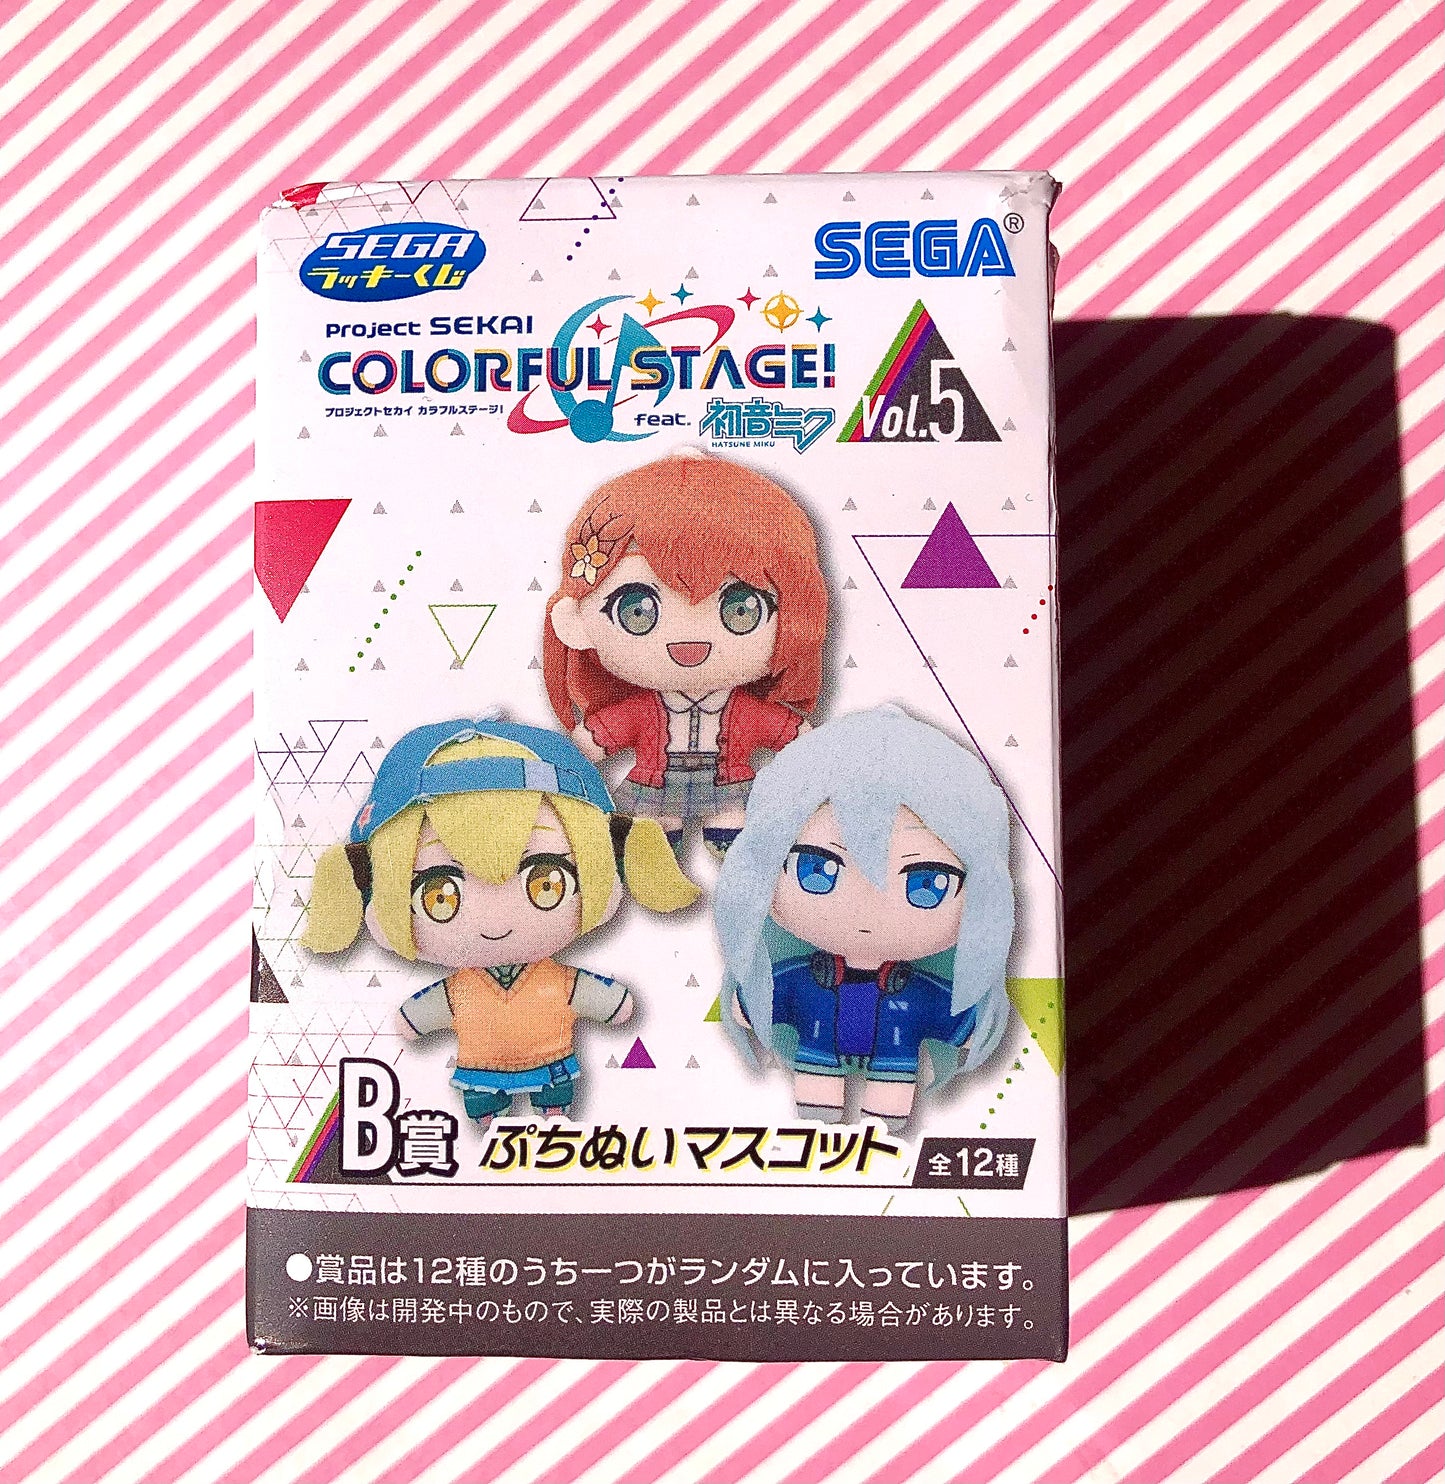 Gacha Project Sekai Colorful Stage Mini Plush! ft. Hatsune Miku Vol. 5